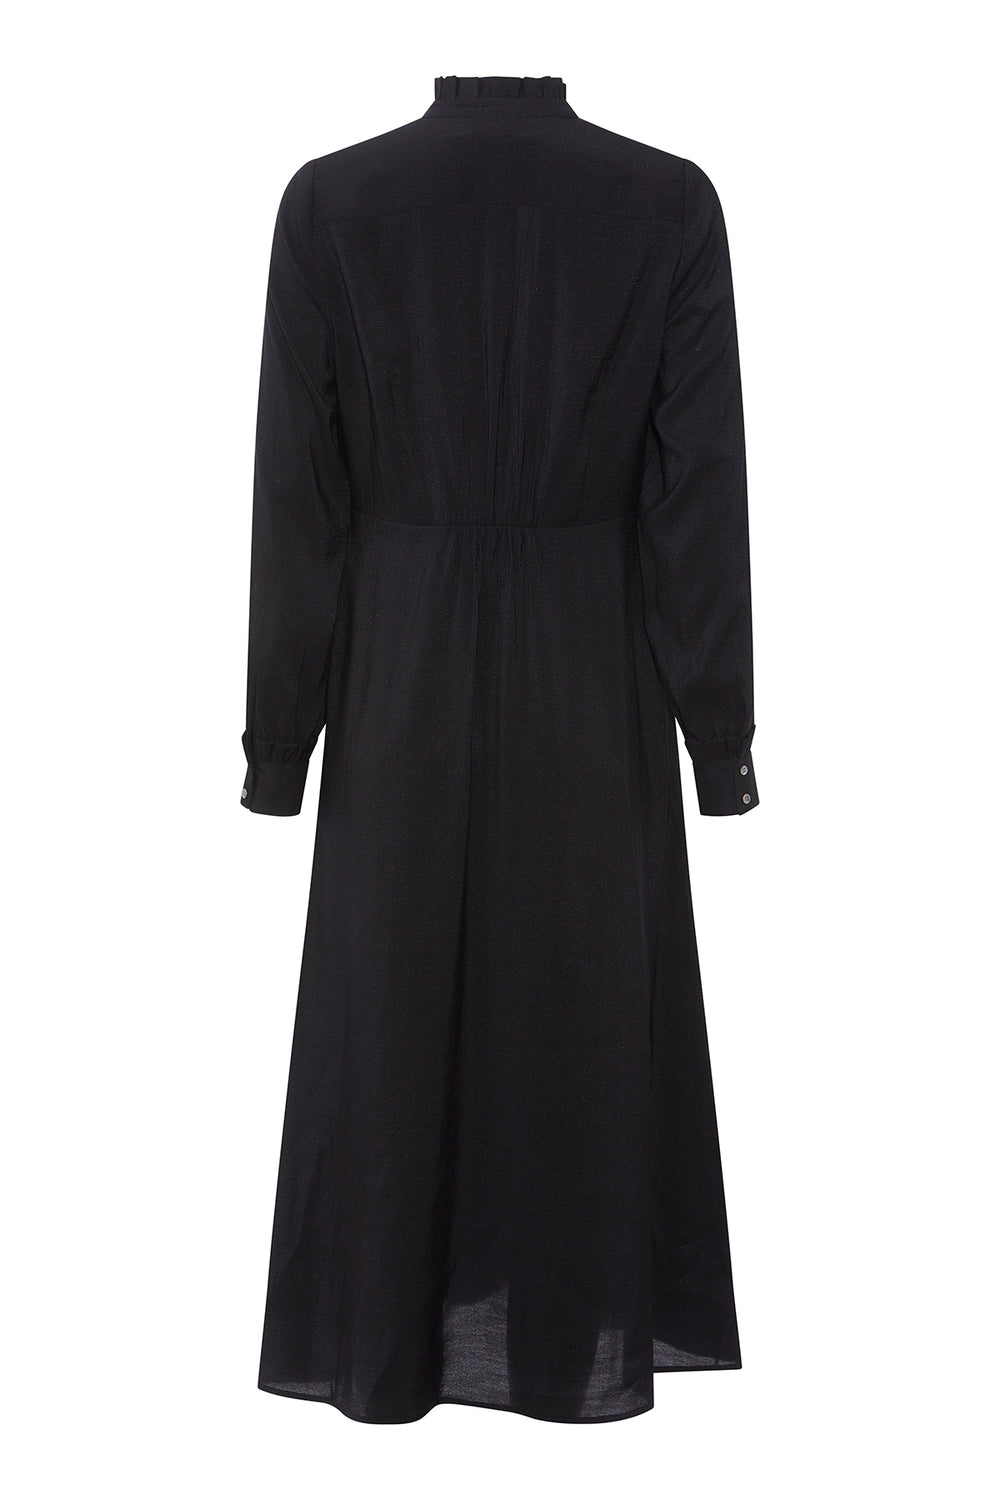 PBO Loon dress shirt DRESSES 20 Black